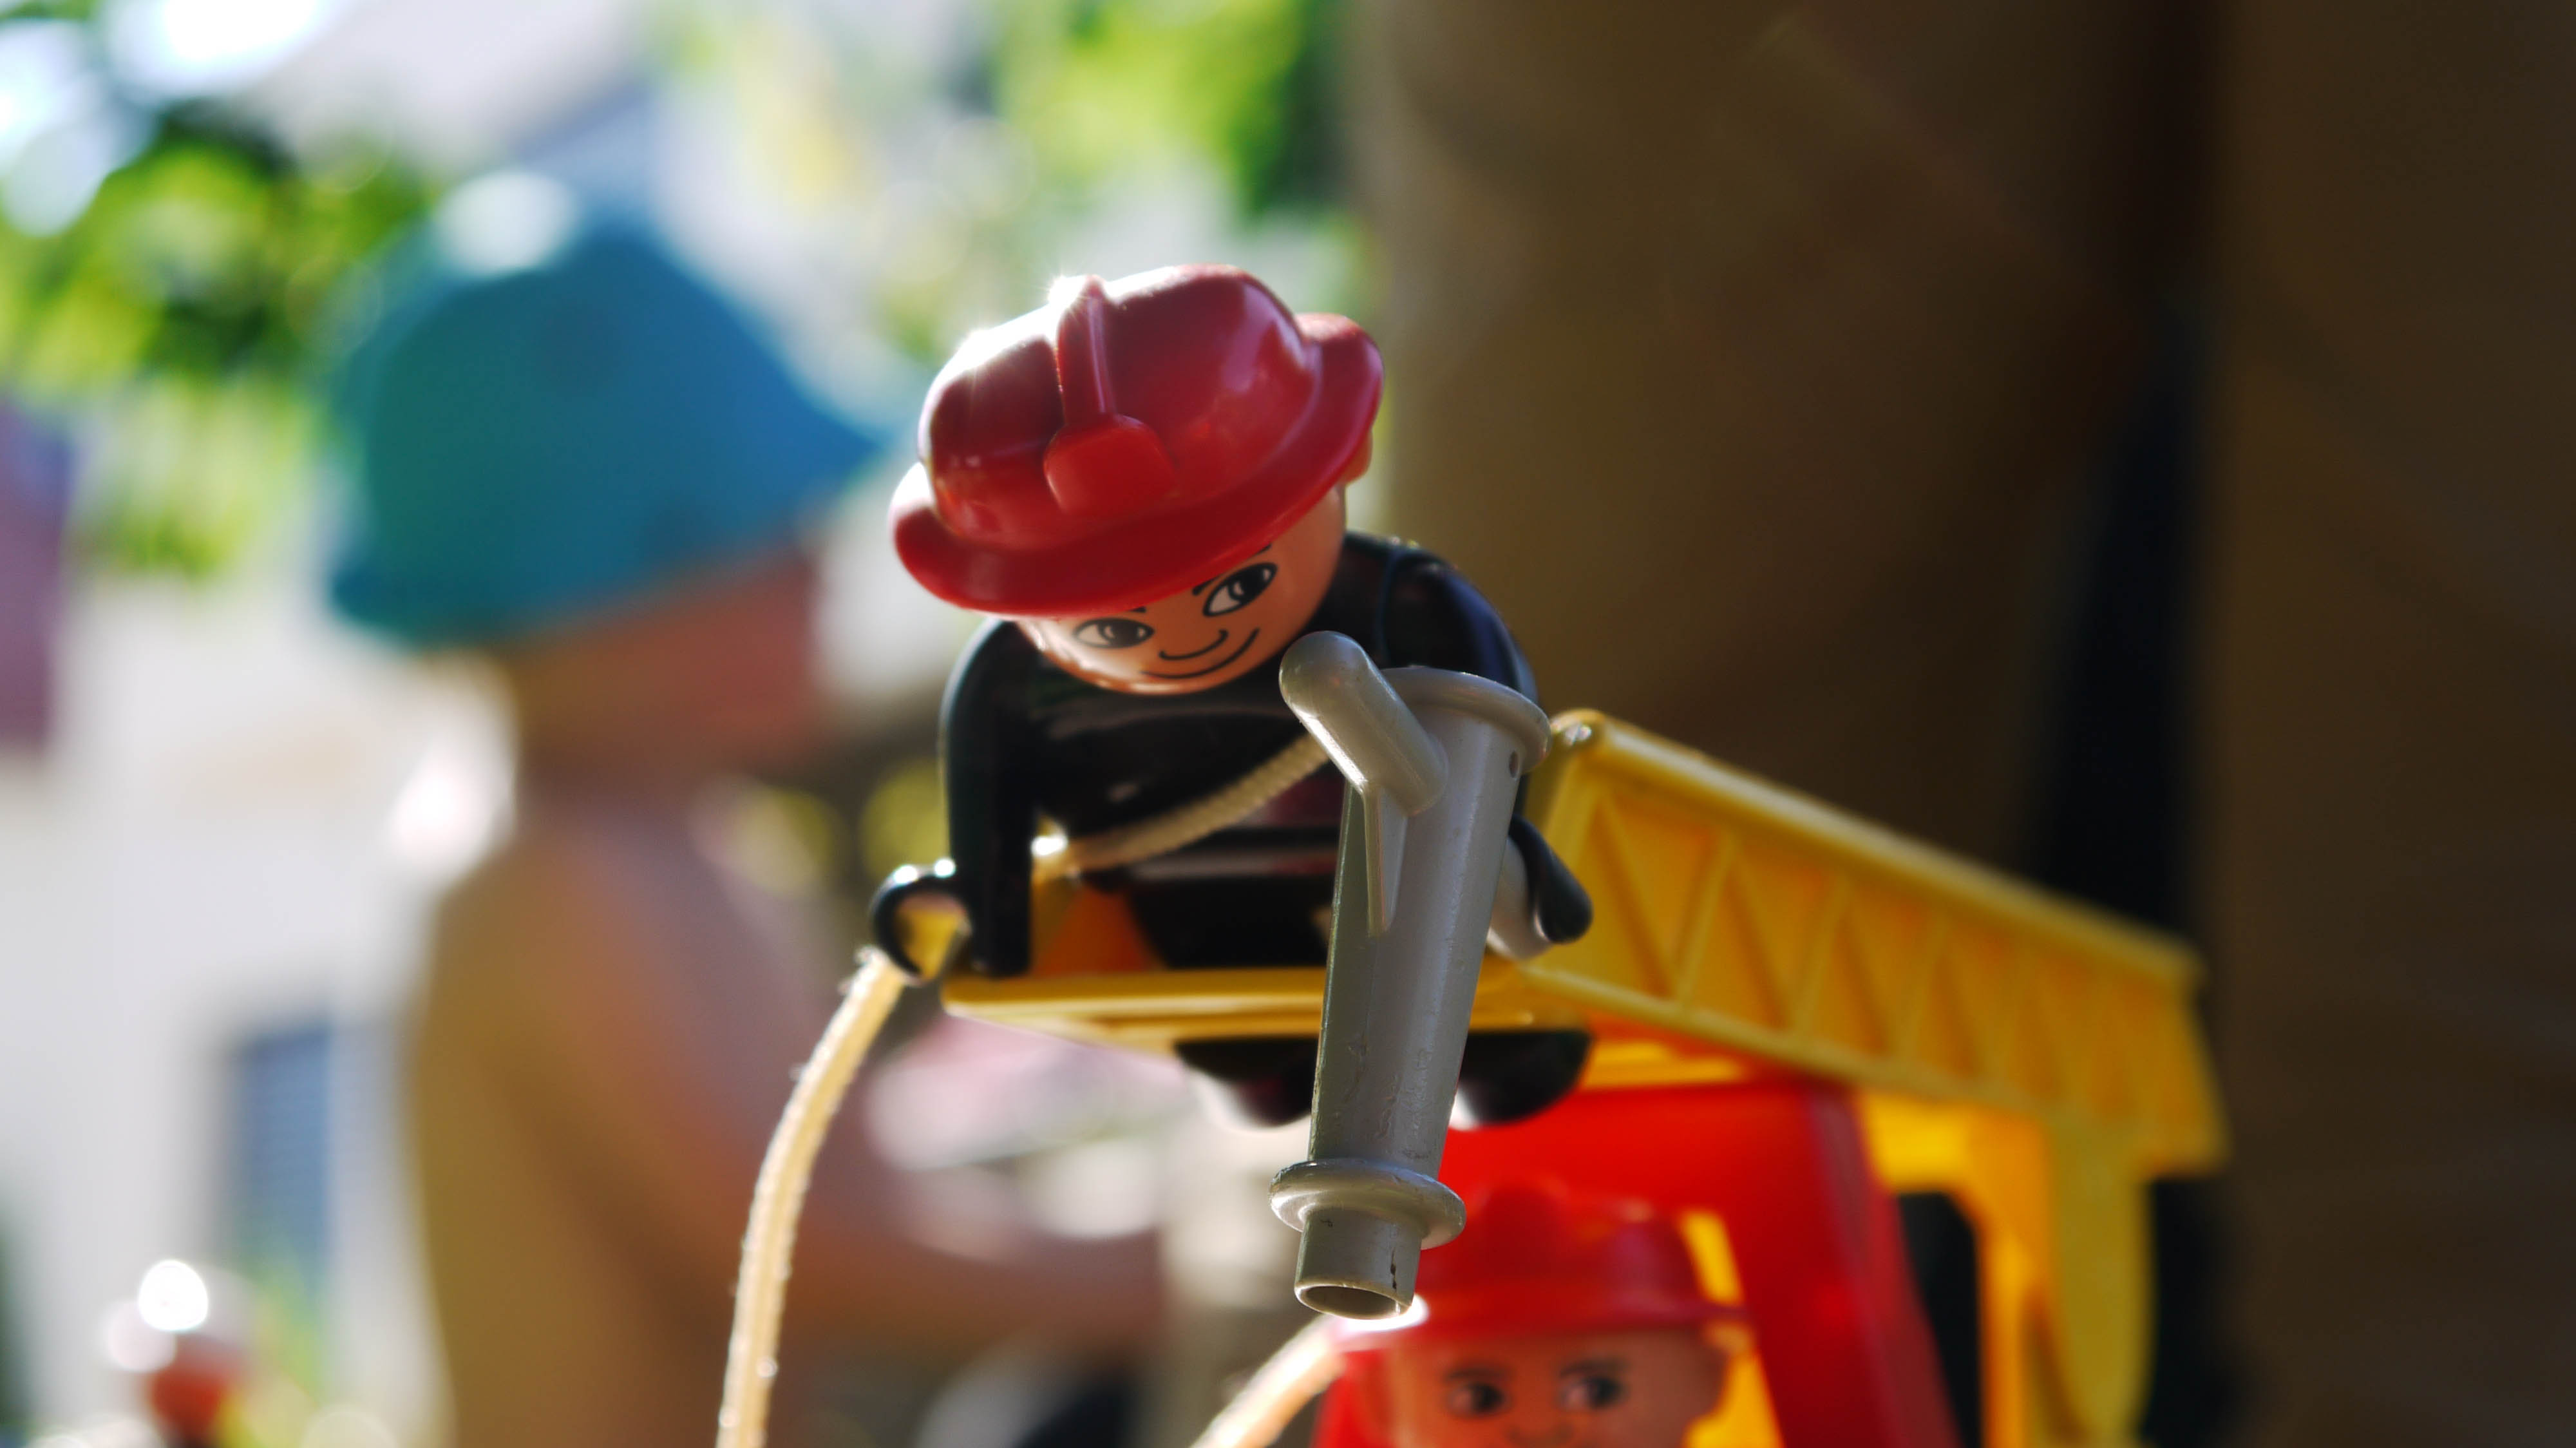 Playmobil Feuerwehrmann